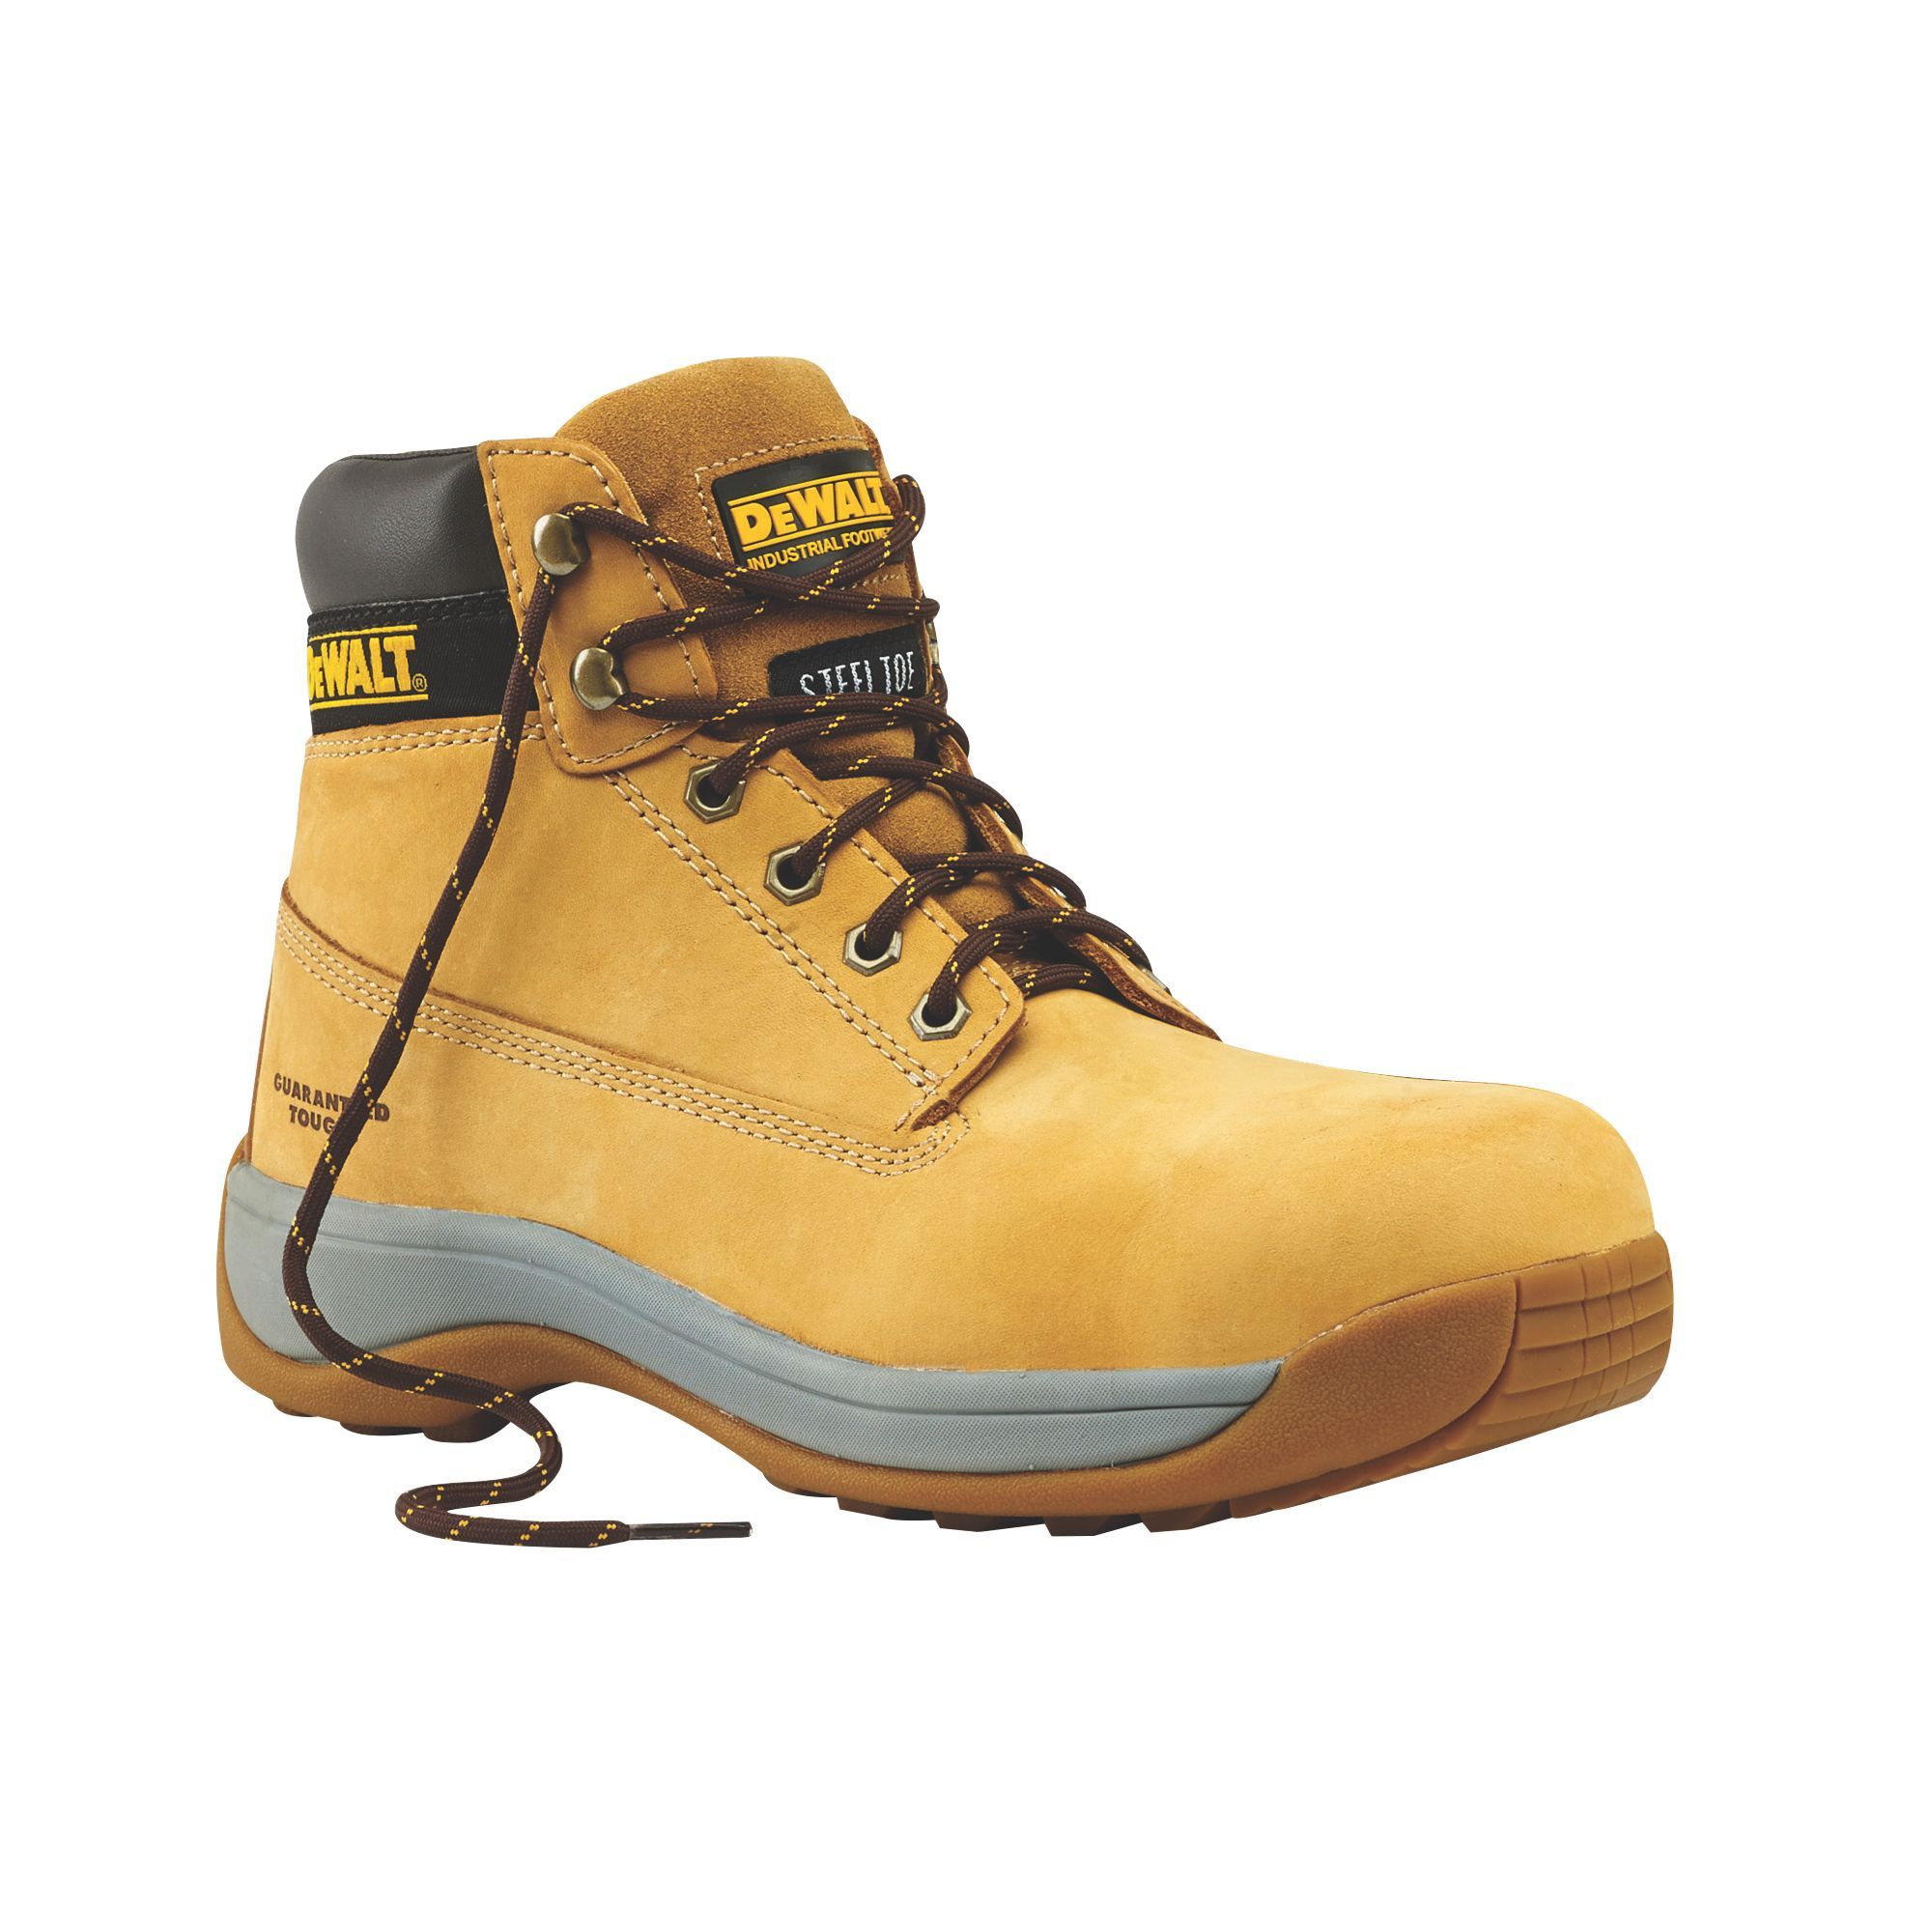 DeWalt Apprentice Men's Wheat Safety boots, Size 11